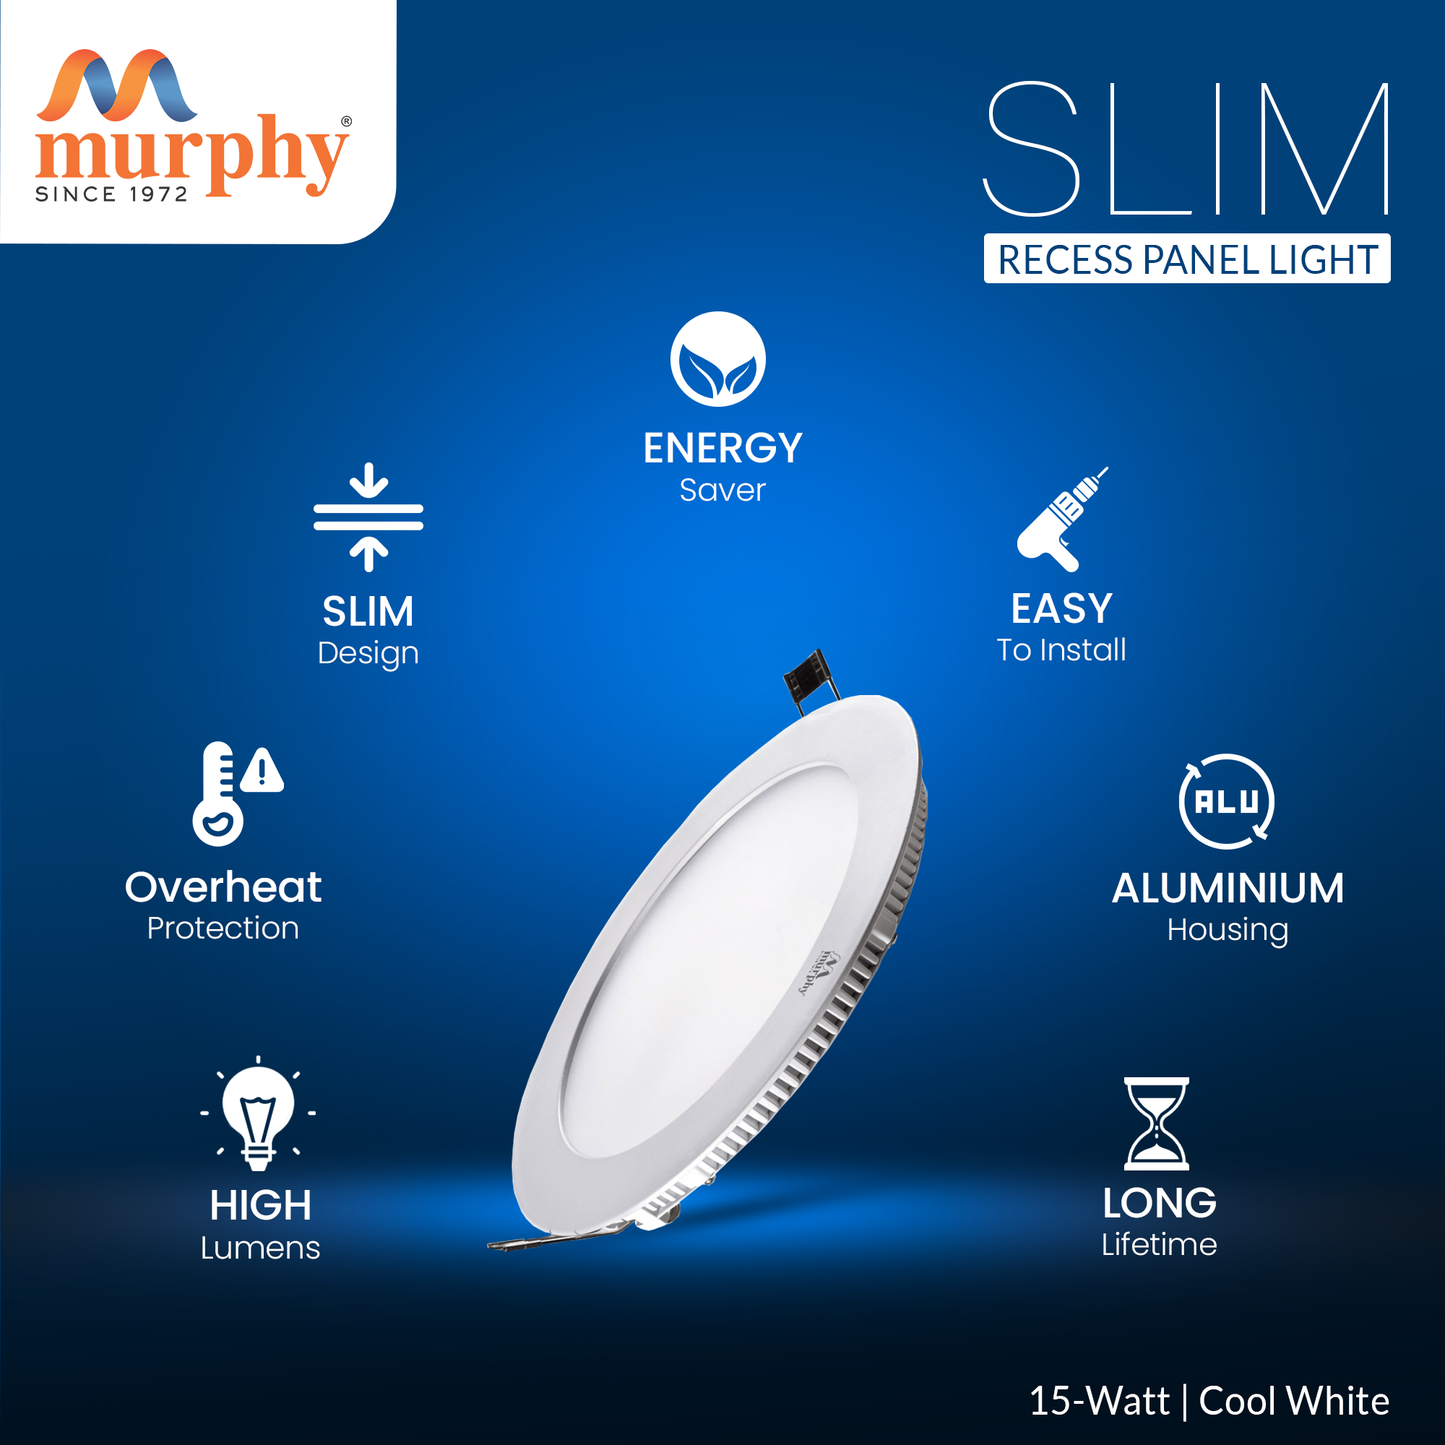 Murphy 15W Slim Round Recess Panel Light